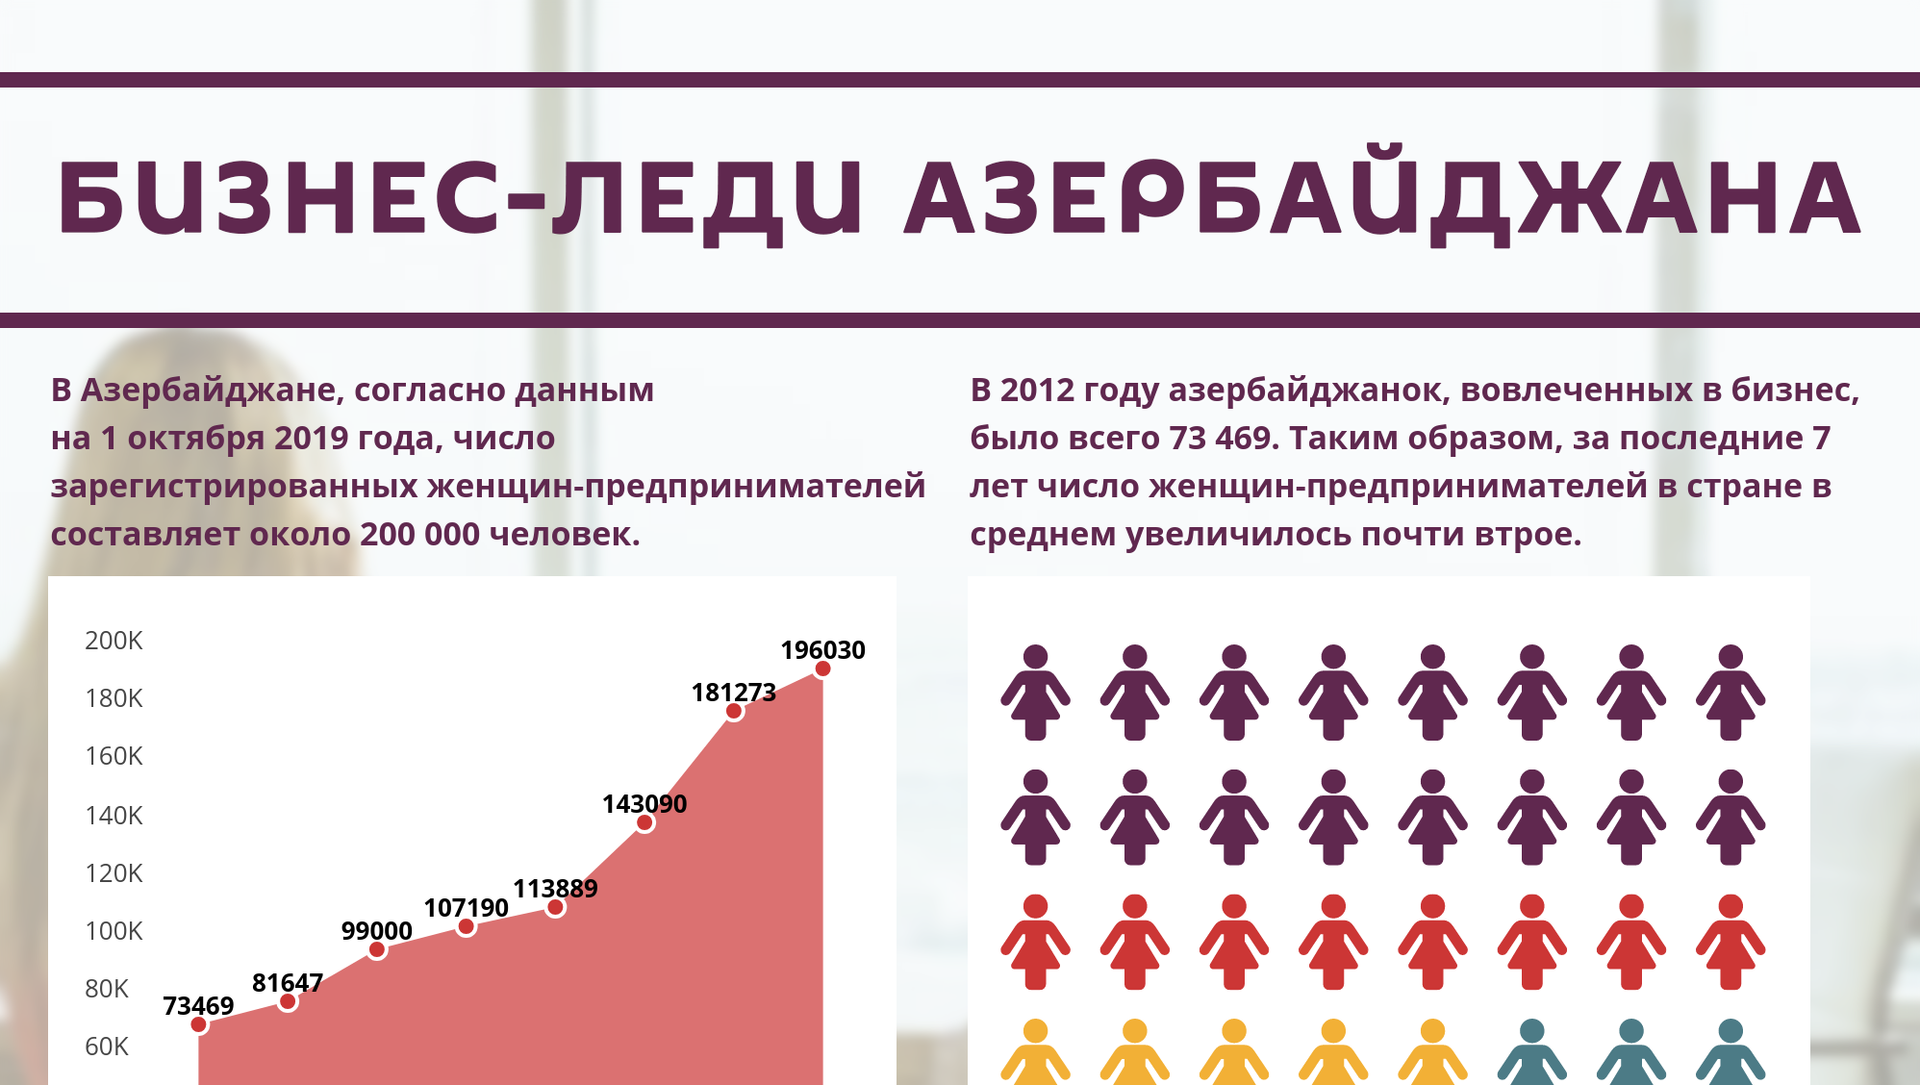 Кого больше мужчин или женщин. Biznes Lady Azerbaijan. Кого больше в Азербайджане мужчин или женщин. Статистика изменяющих мужчин и женщин в Азербайджане.